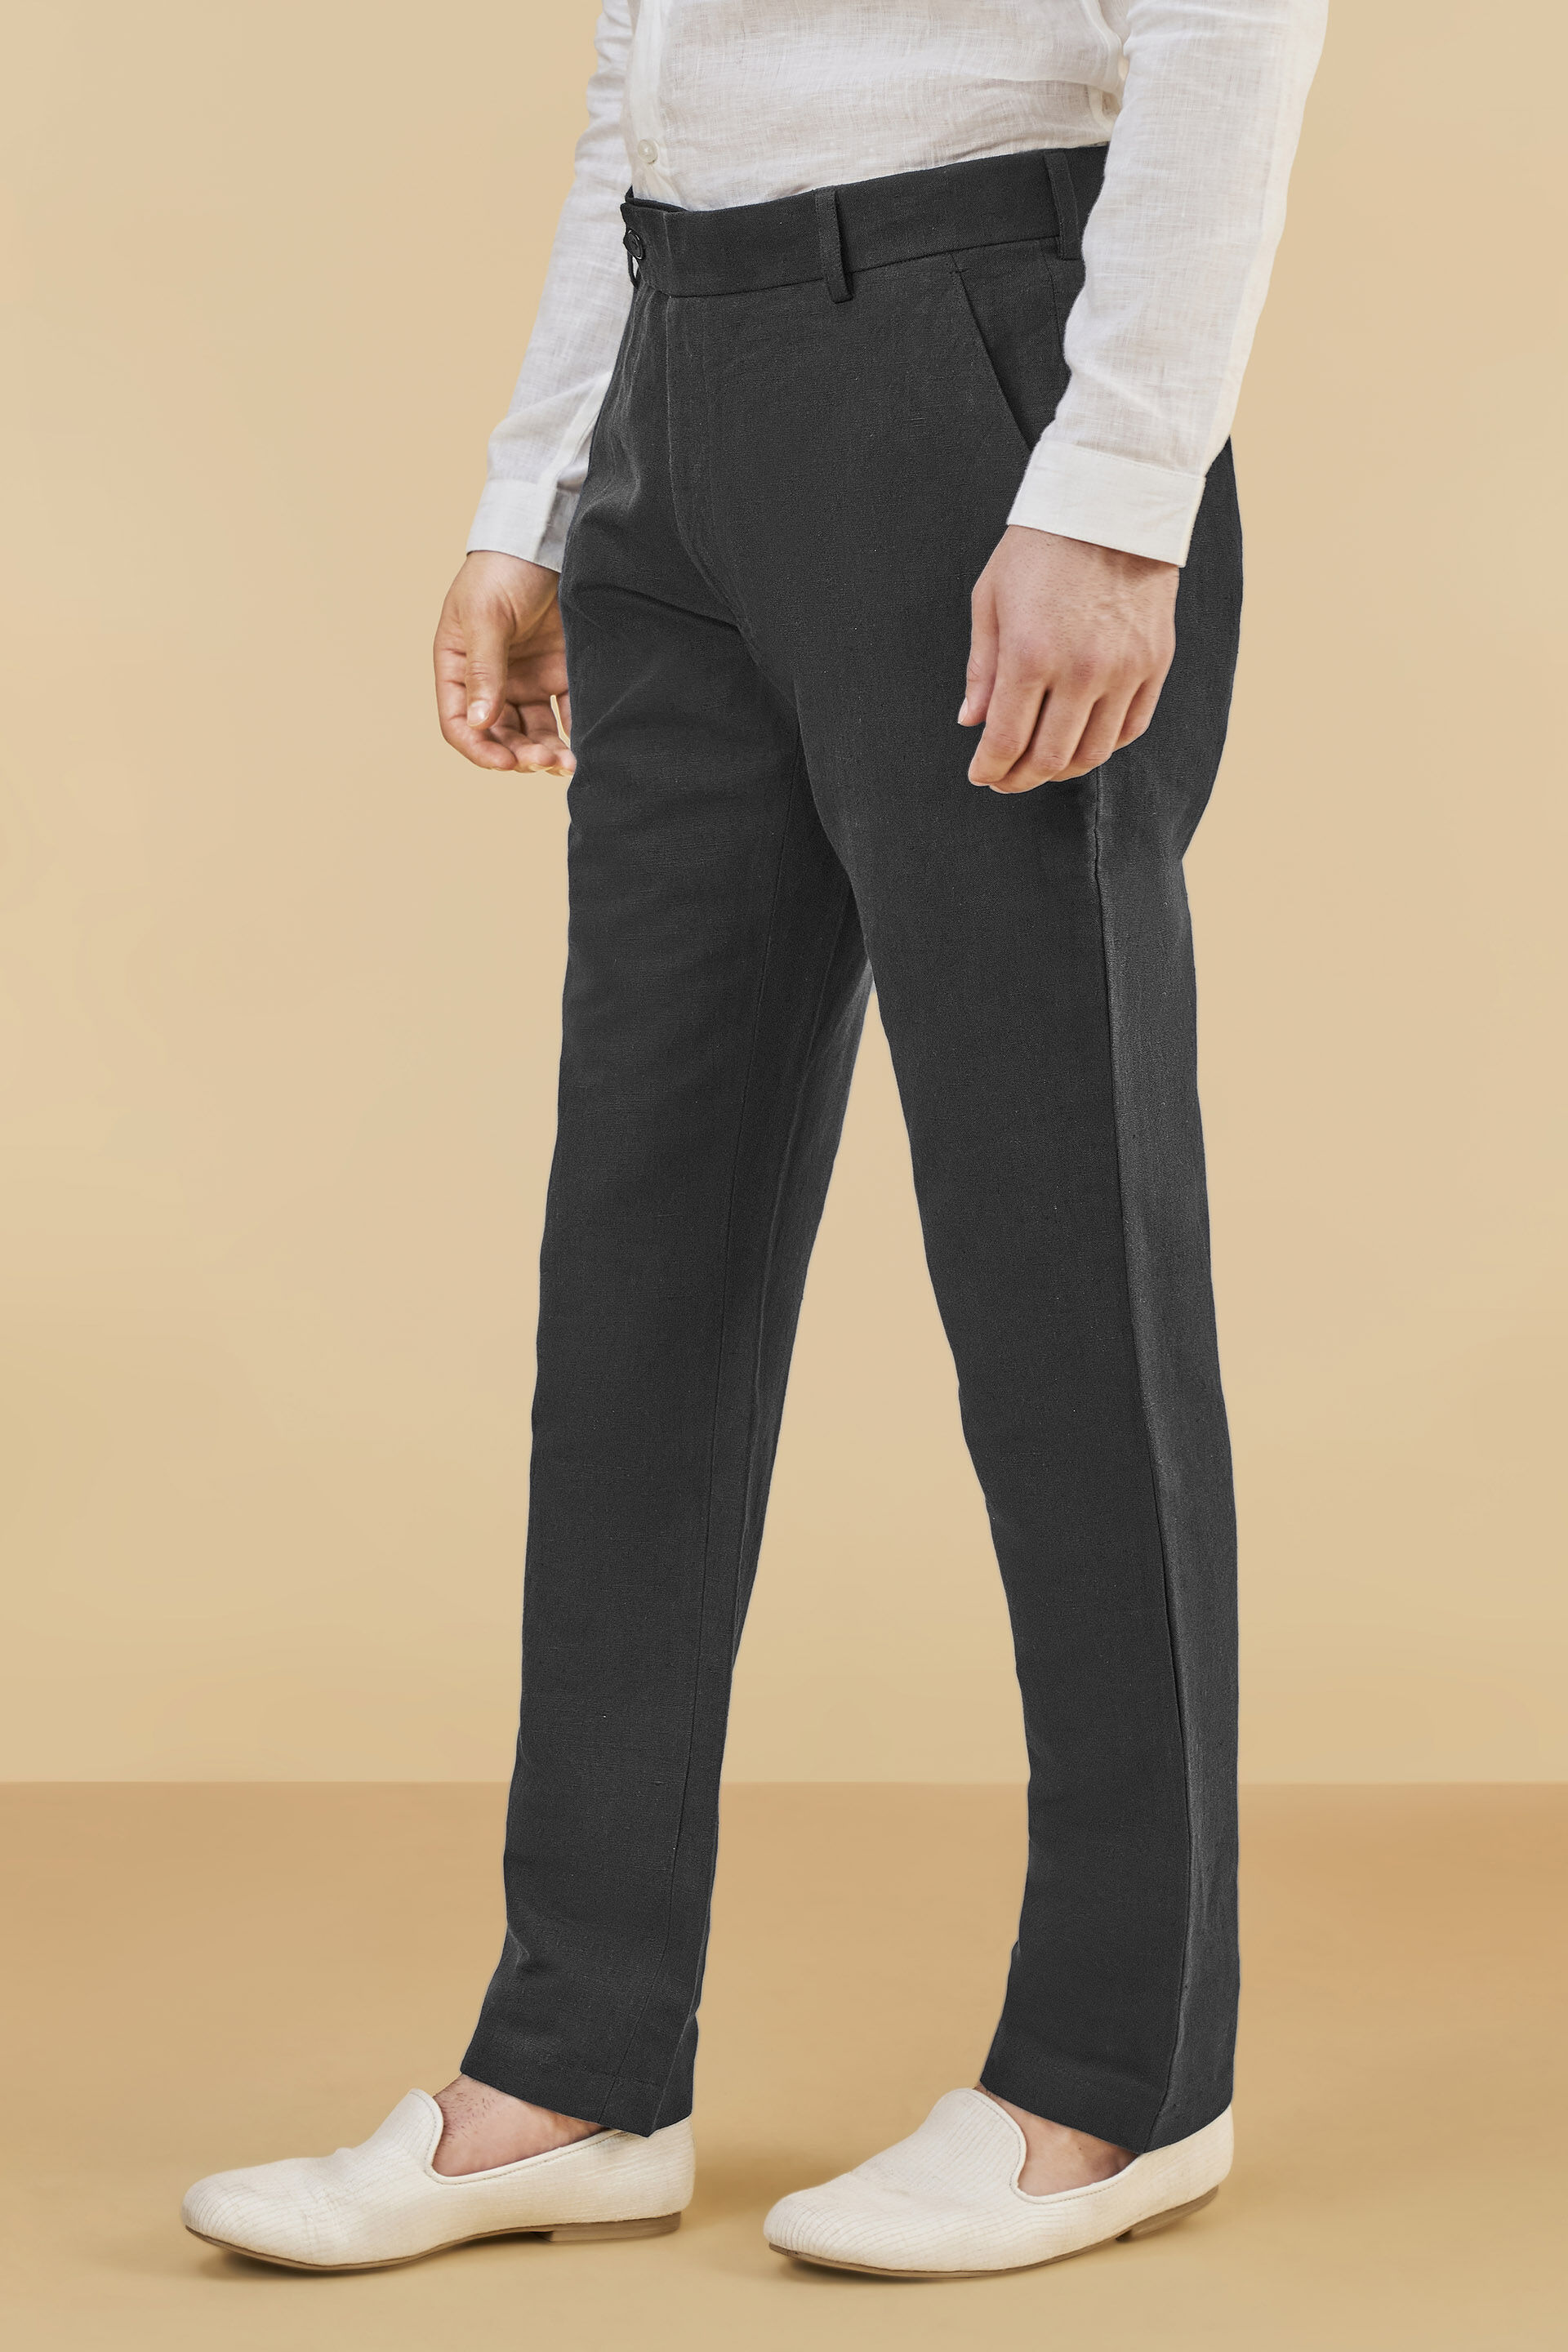 Vintage Style Linen Trousers Men's Business High Waist Straight Pants | eBay